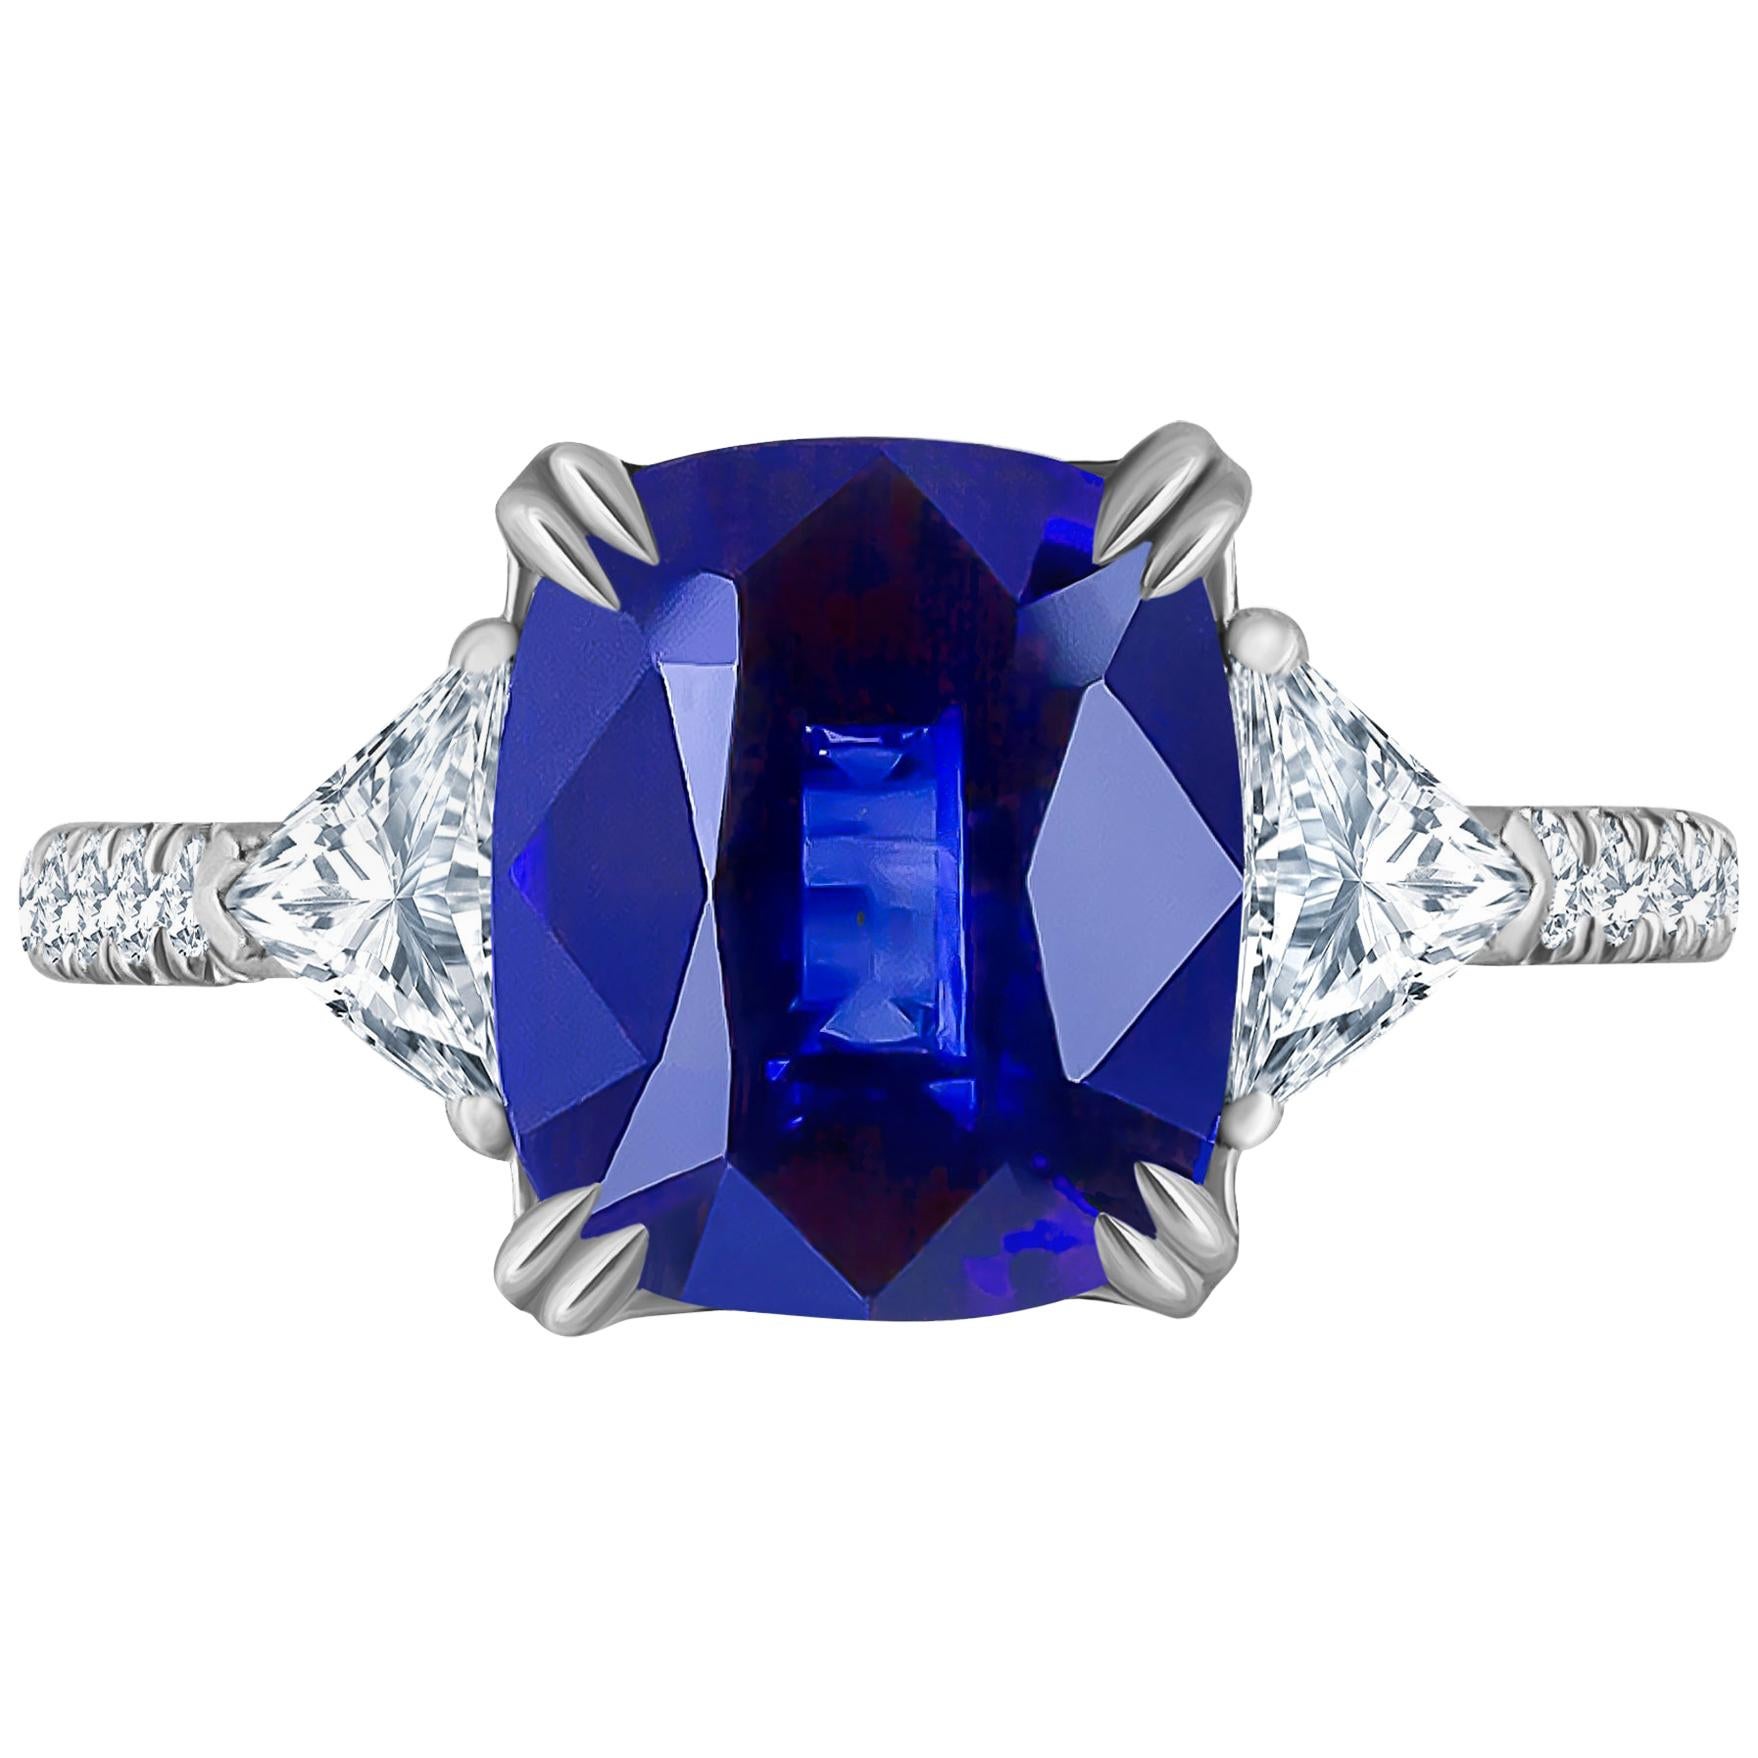 Emilio Jewelry Certified 4.84 Carat Vivid Blue Ceylon Sapphire Diamond Ring